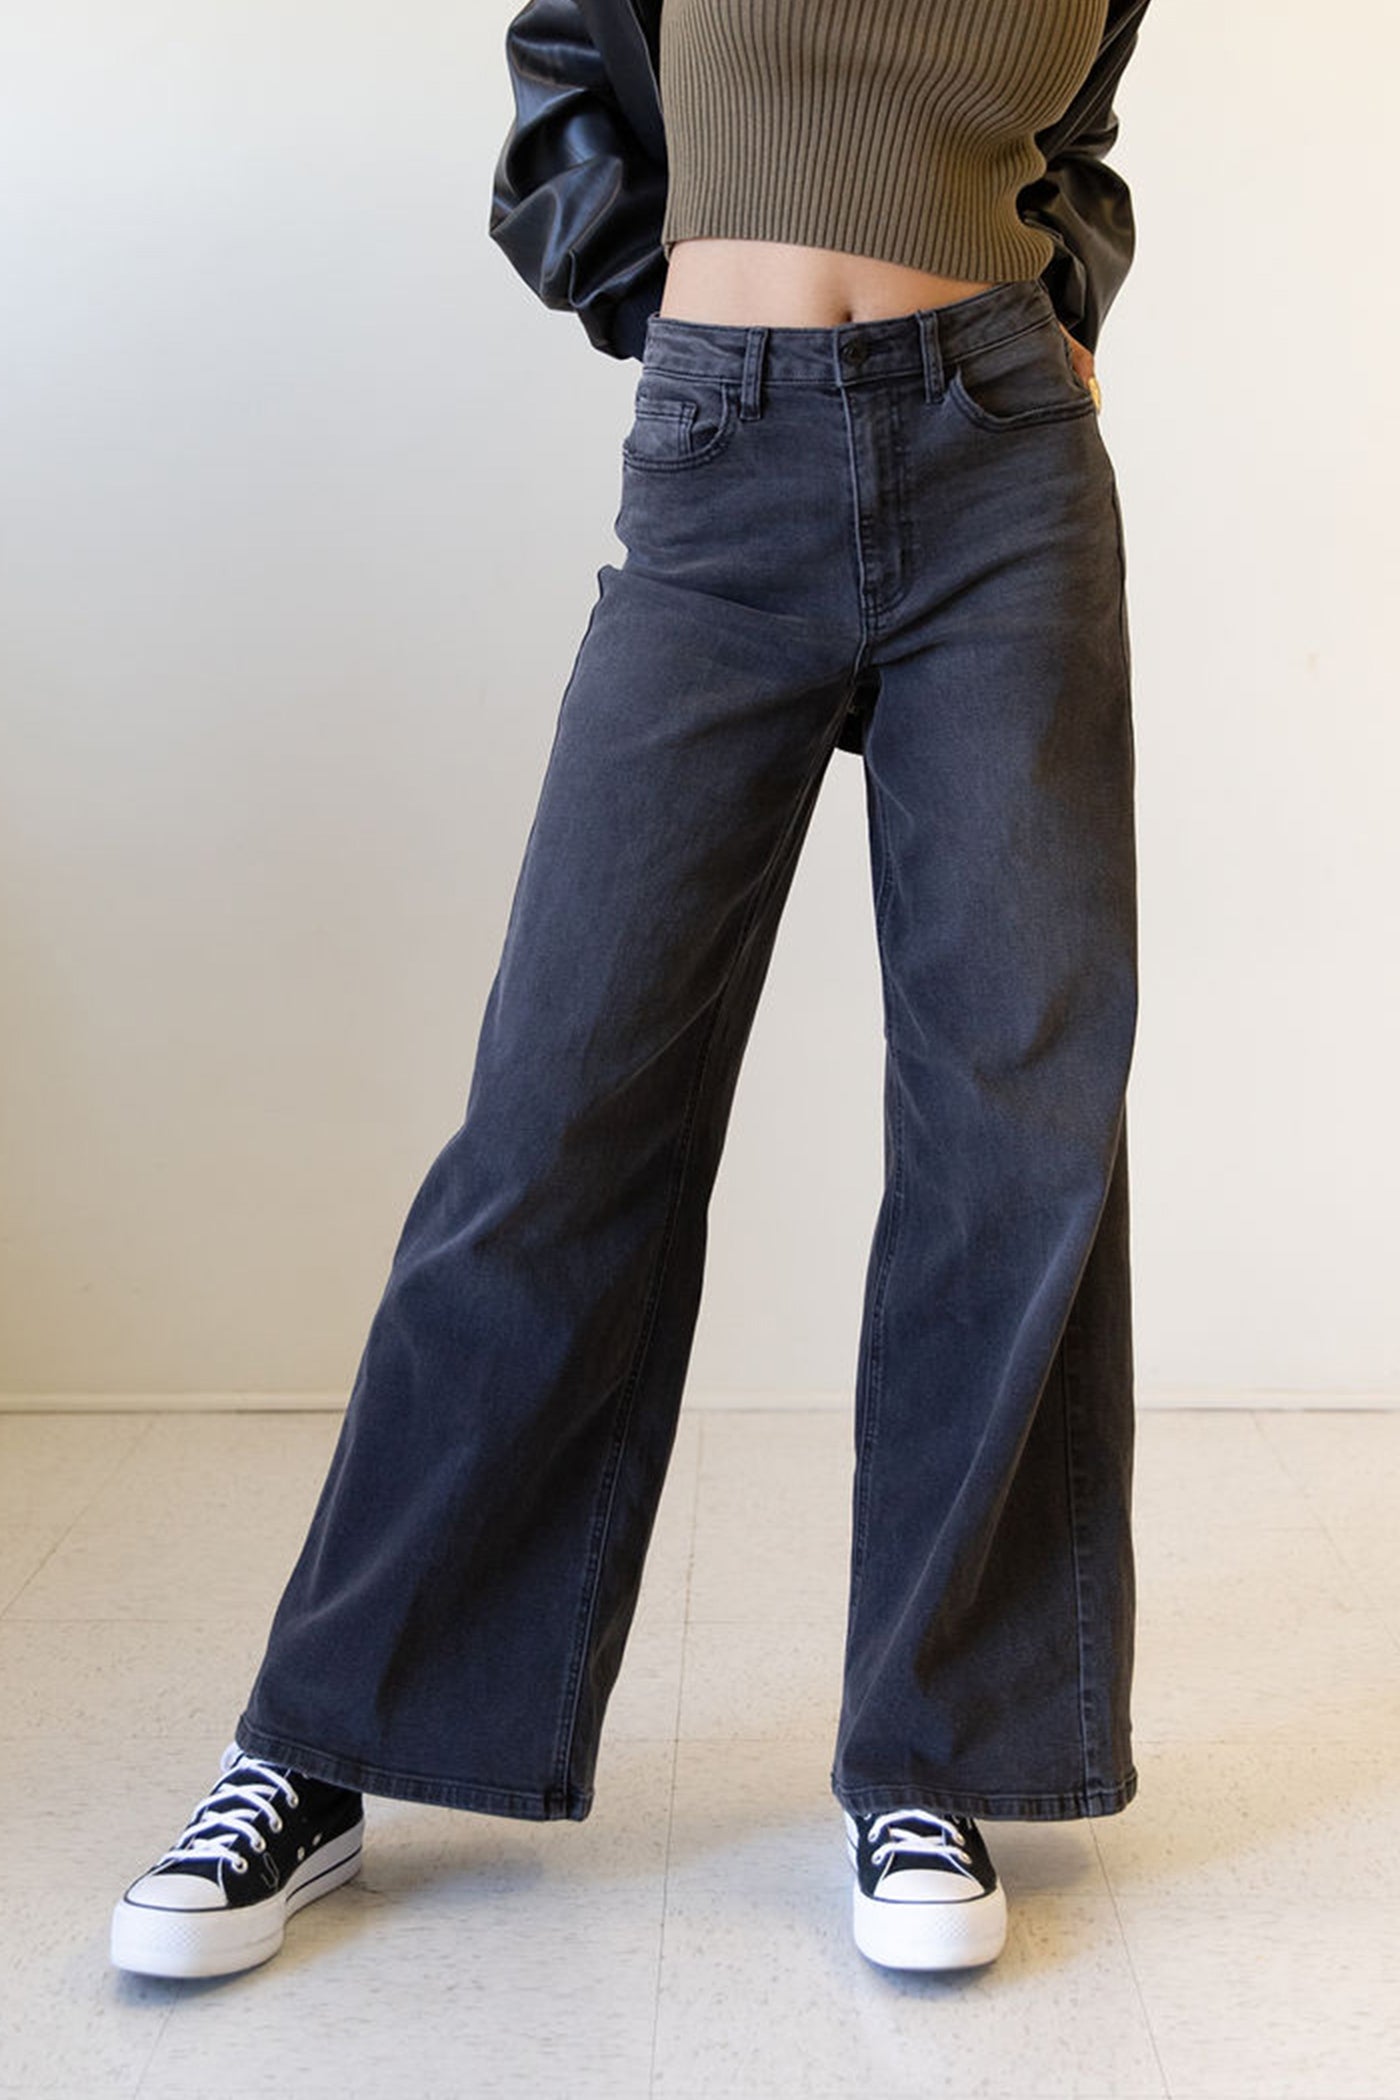 The Olivine High Rise Wide Leg Jeans by Nectar Premium Denim